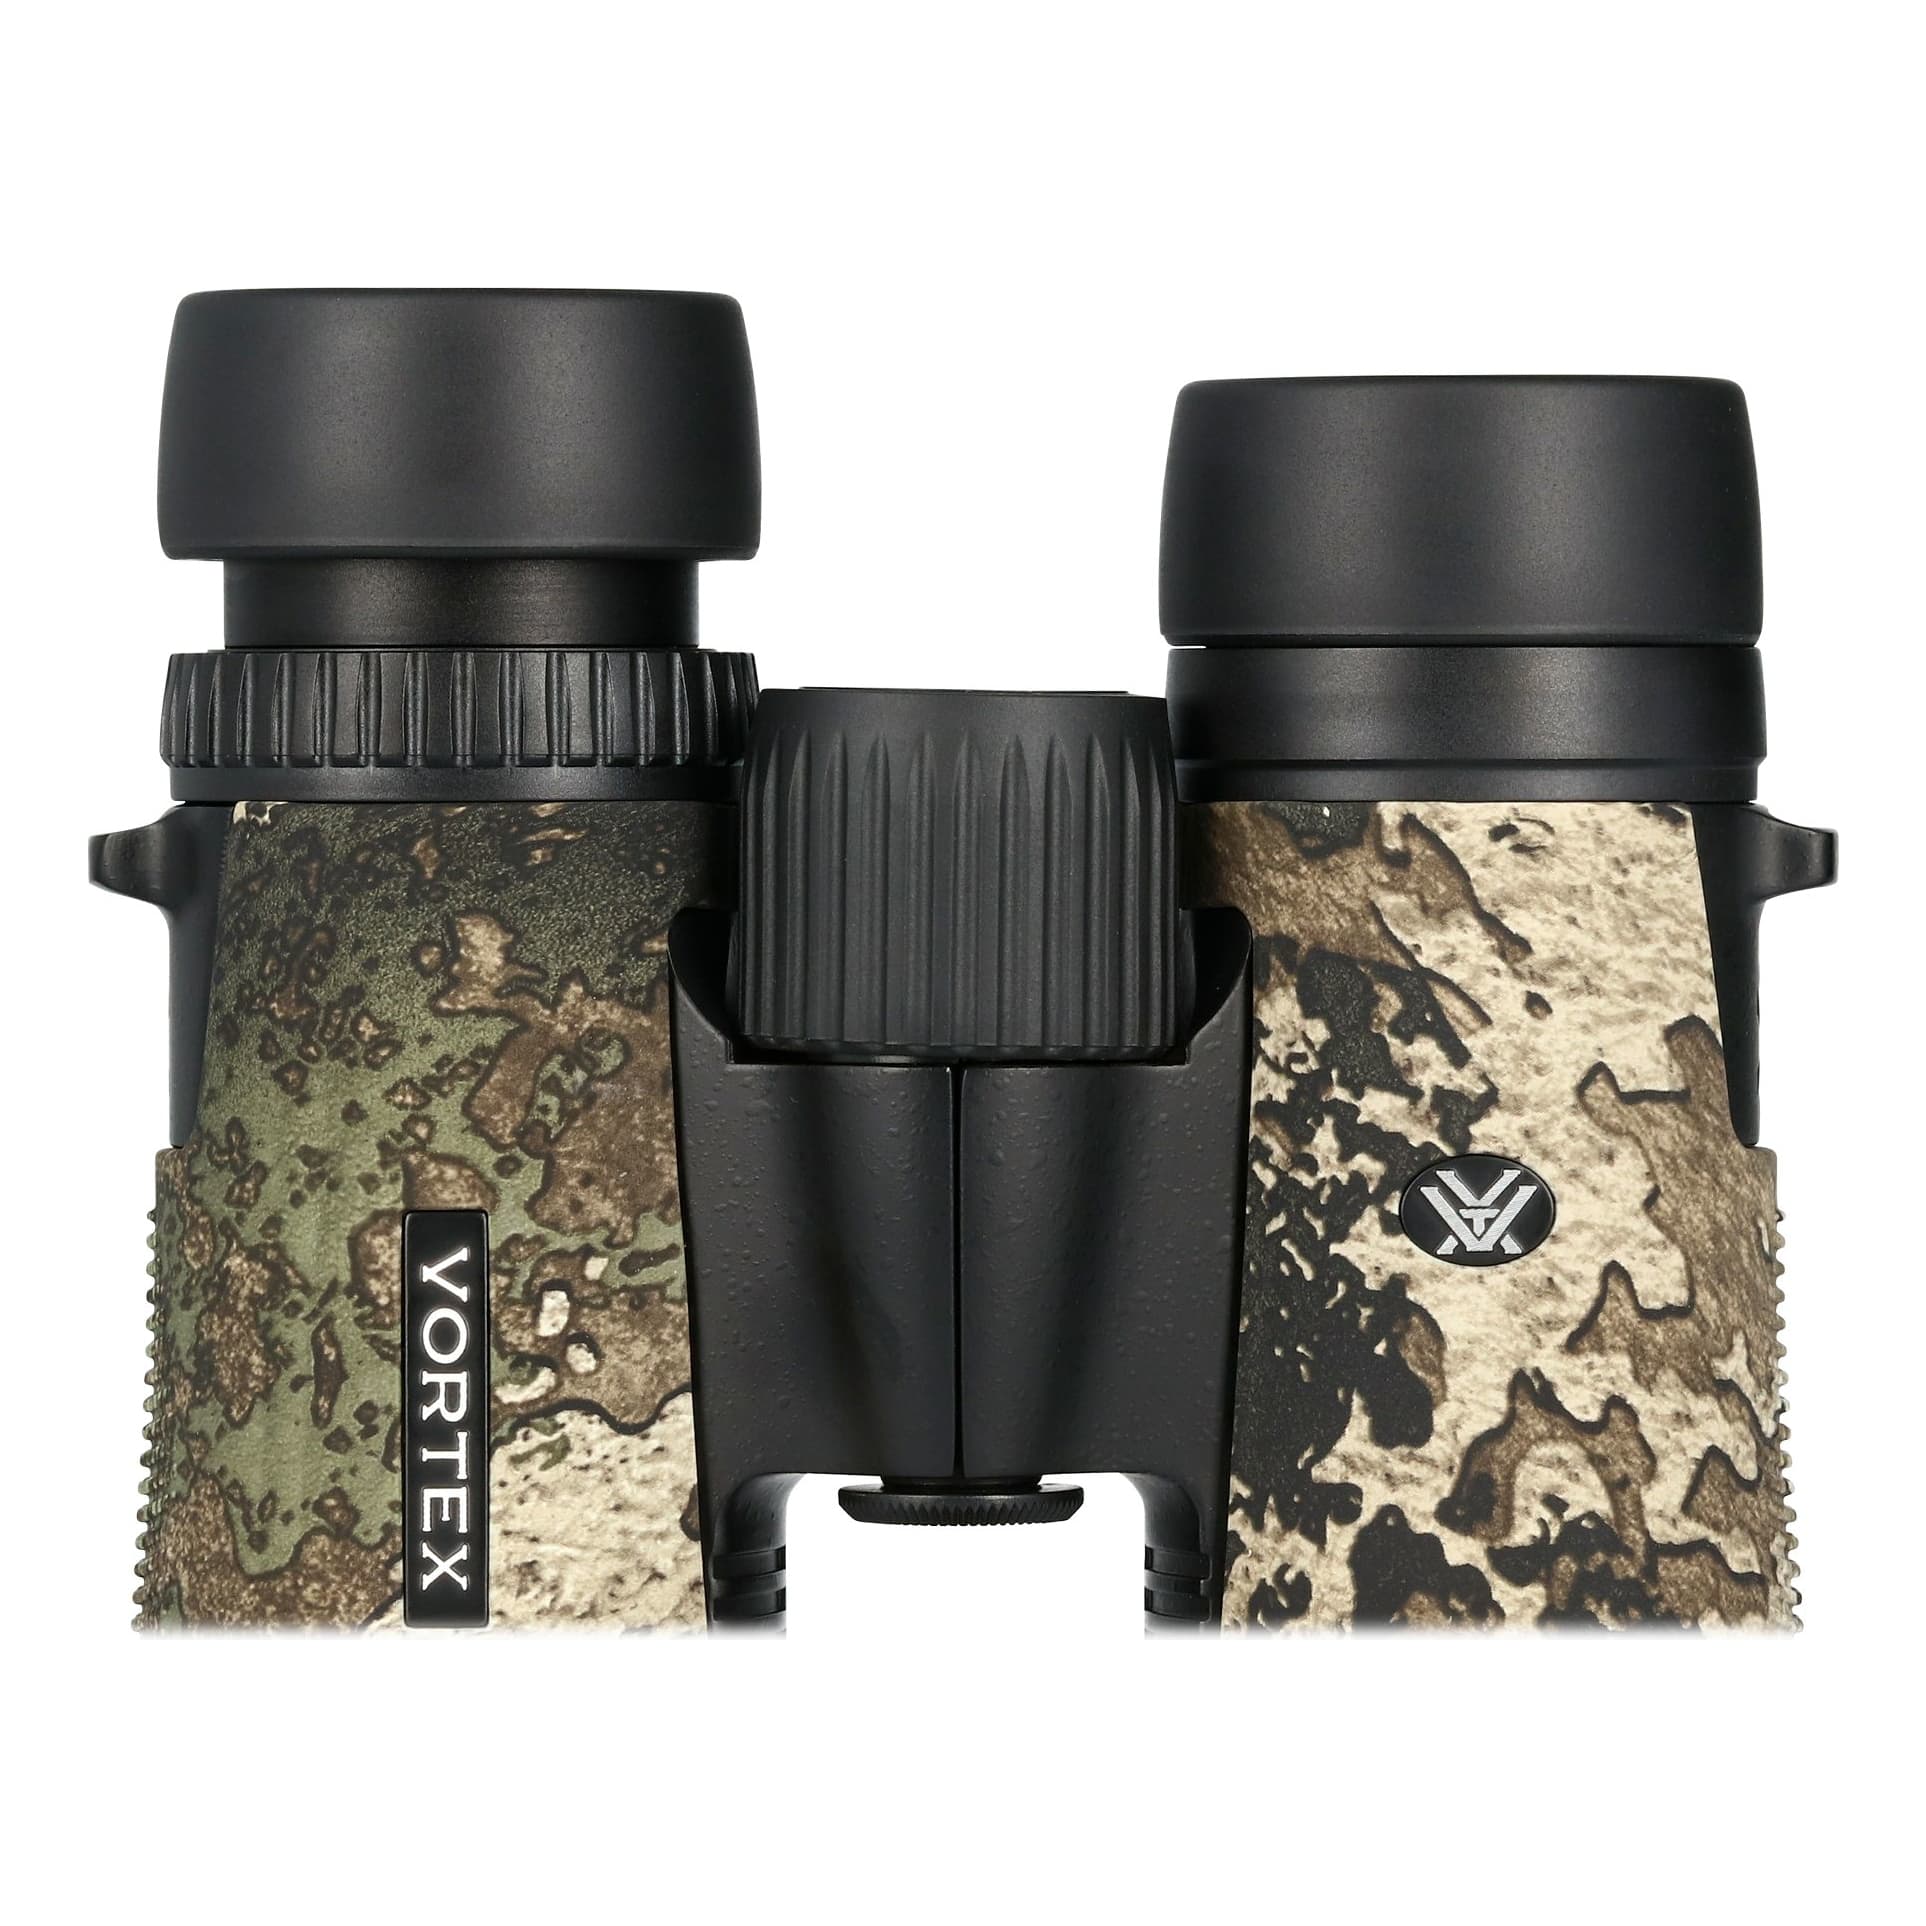 Vortex® Diamondback HD Binoculars in TrueTimber Strata